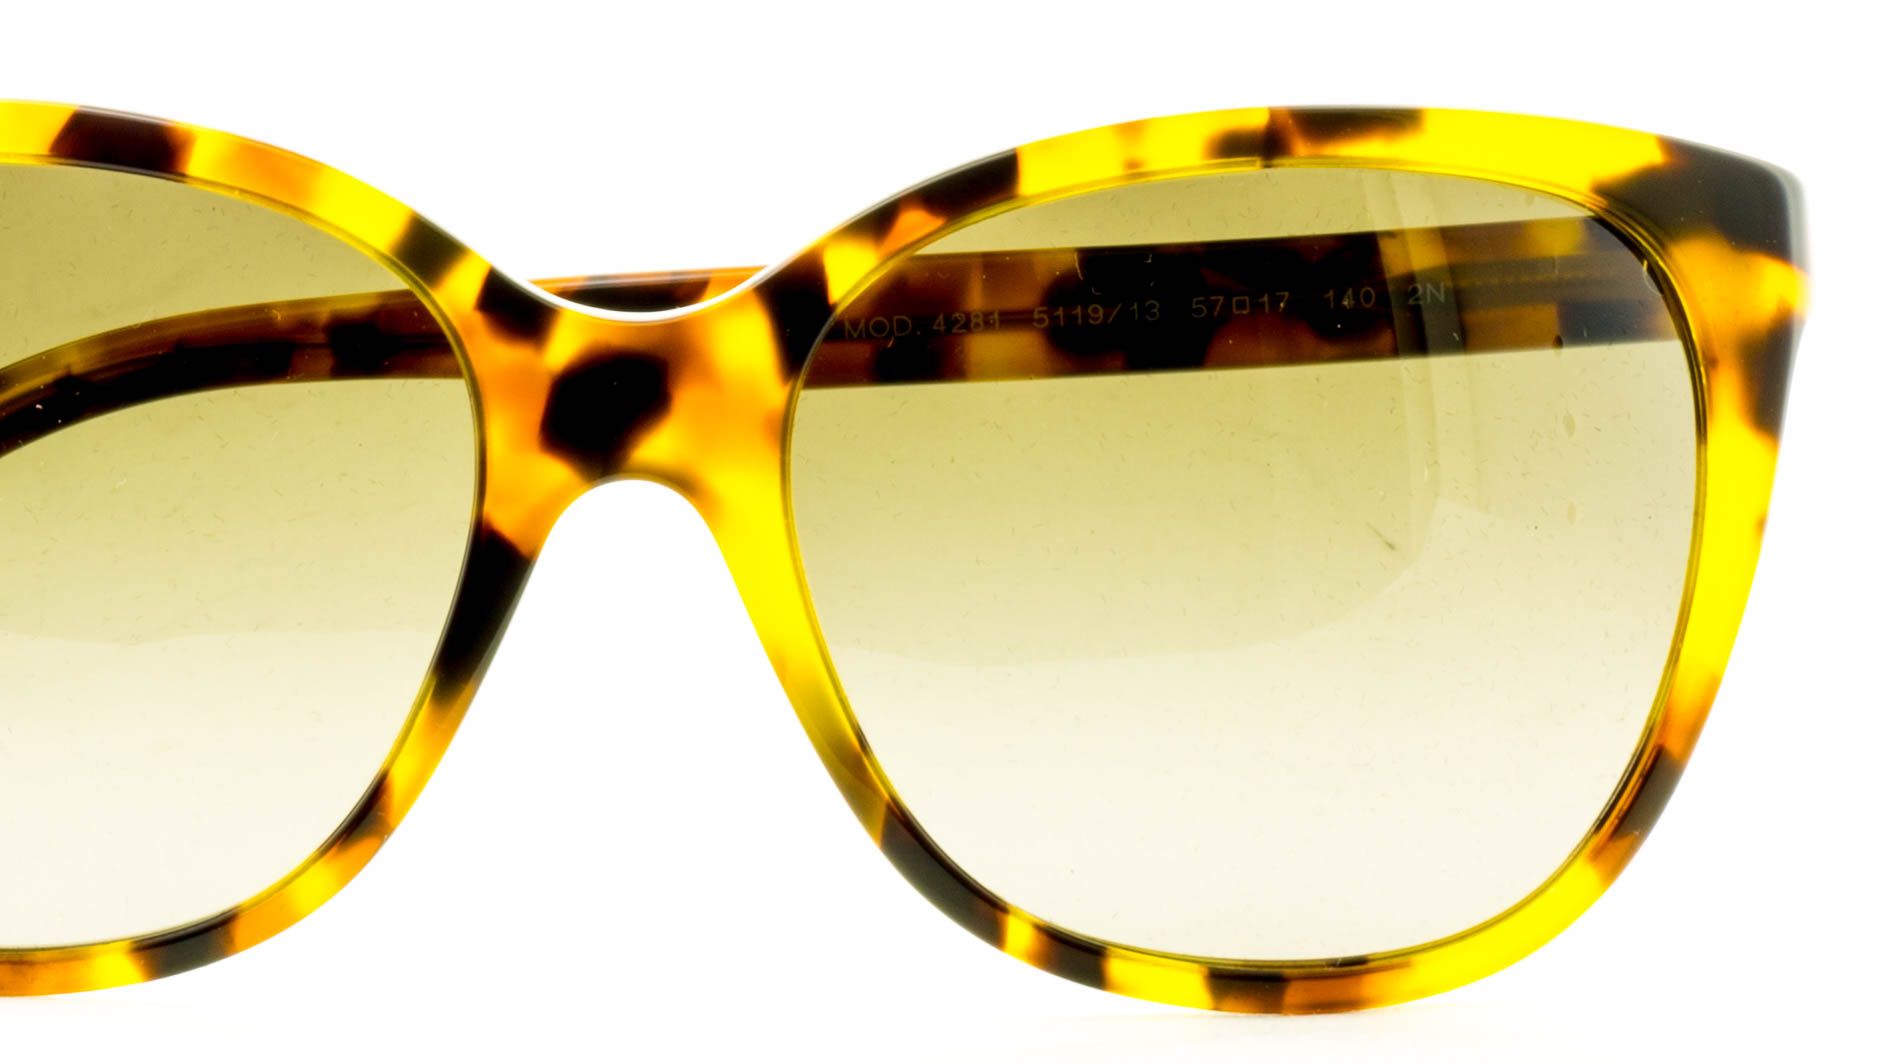 VERSACE MOD. 4281 5119/13 Sunglasses Shades Ladies BNIB Brand New in